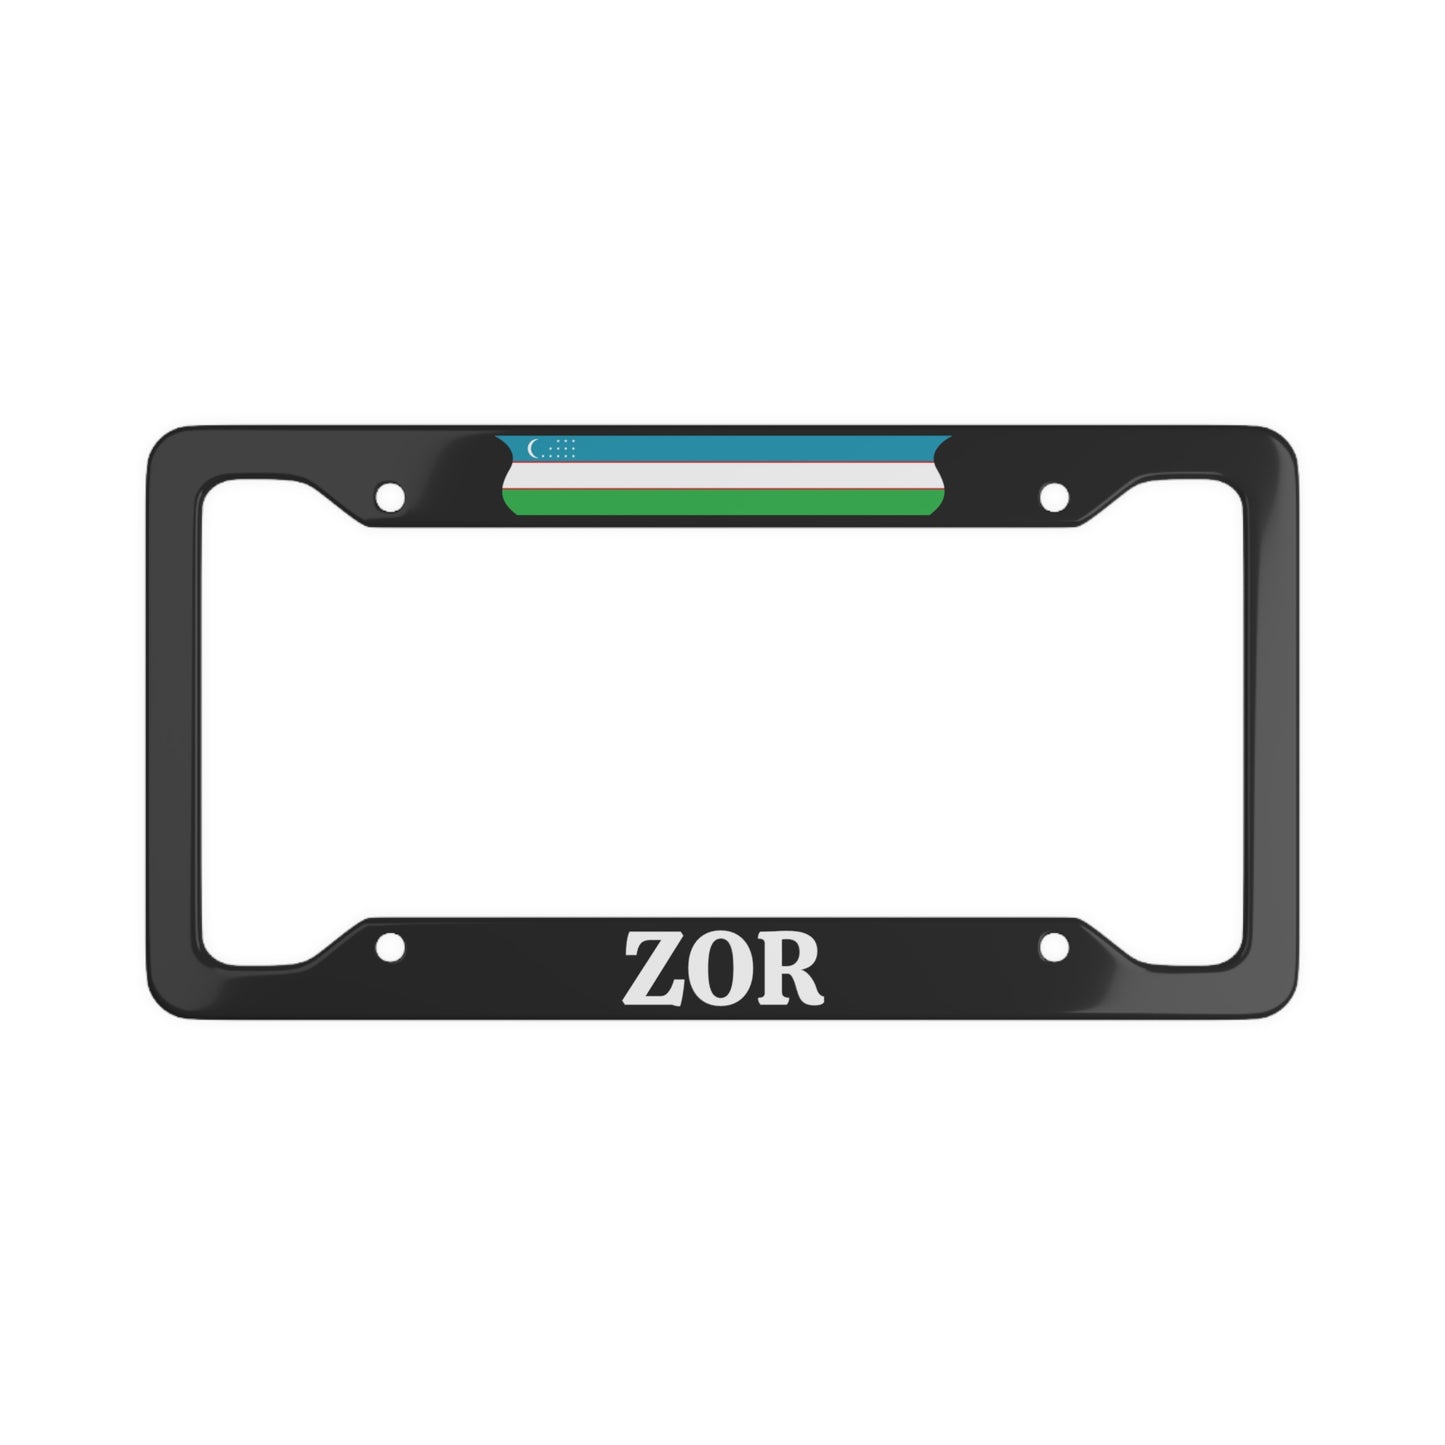 Zor License Plate Frame